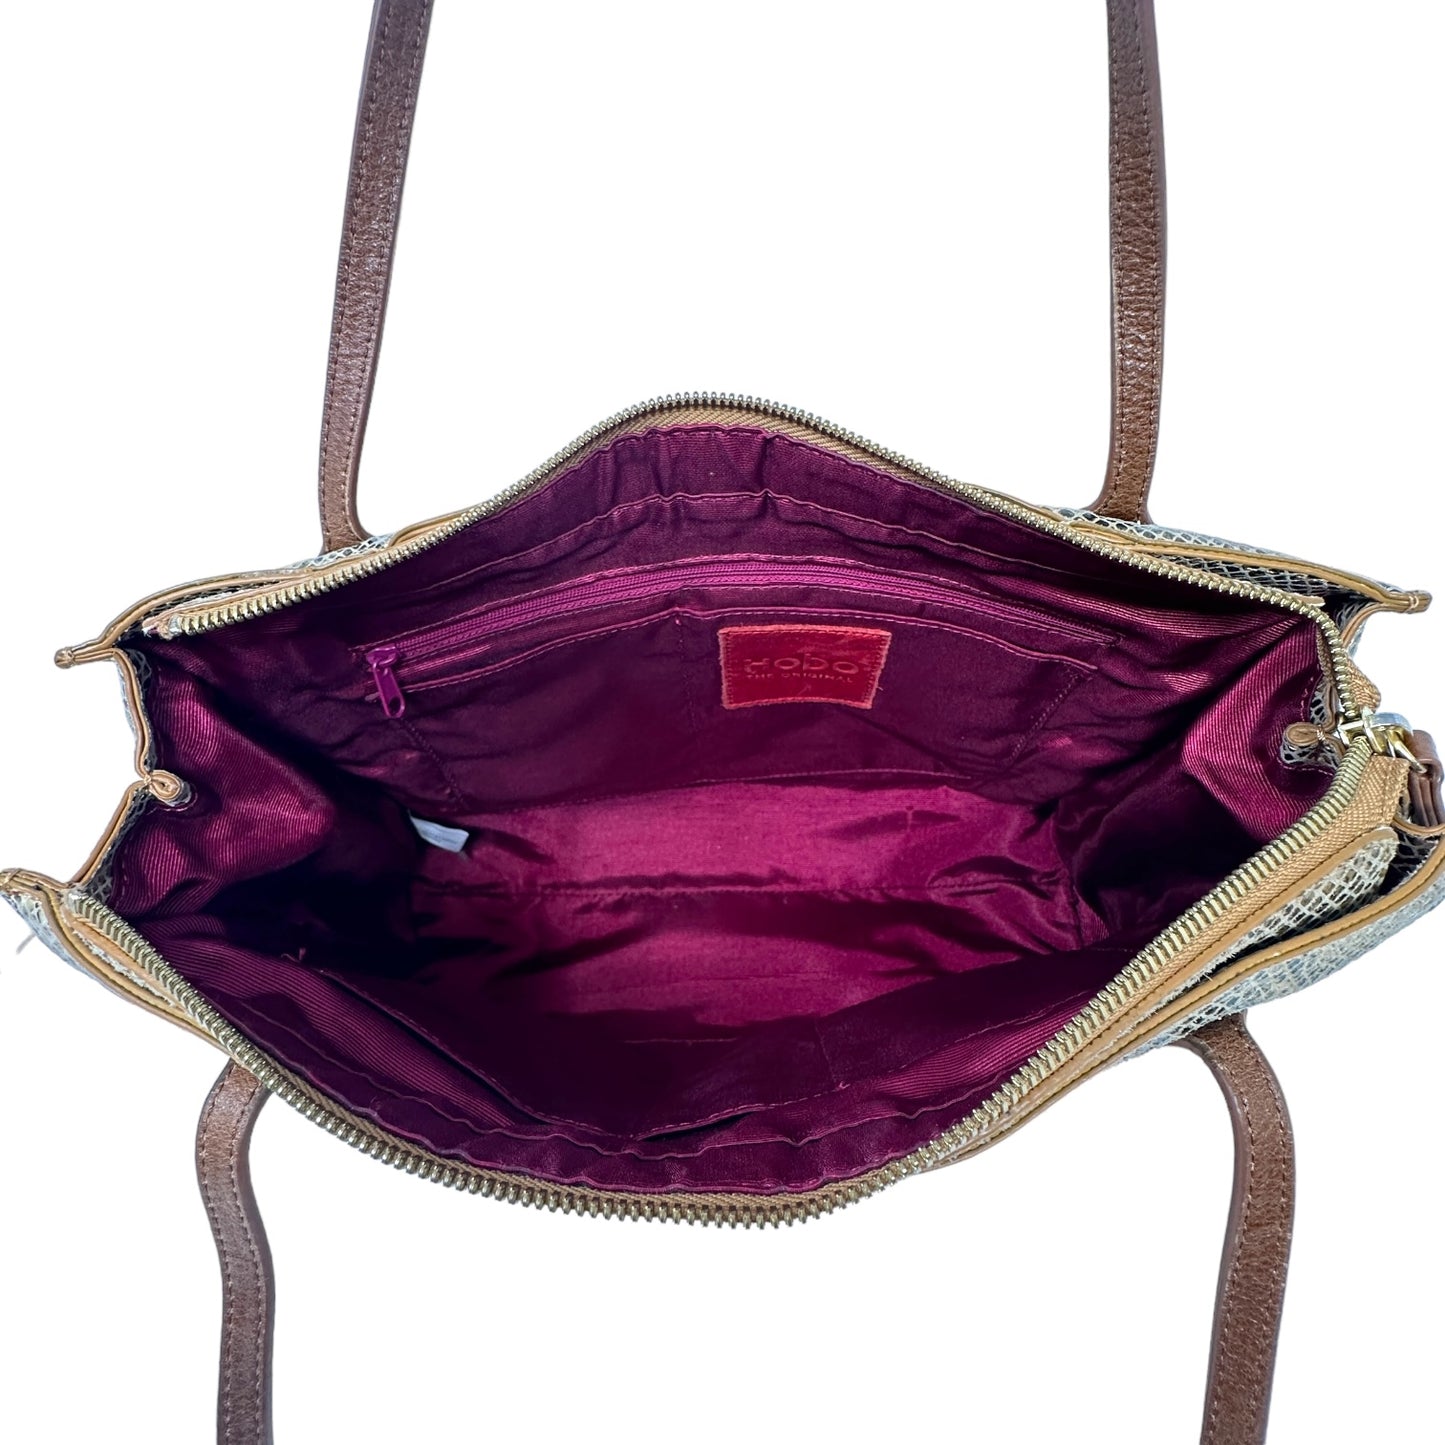 Friar Patterned Leather Handbag - Diamond Snake By Hobo Intl  Size: Medium